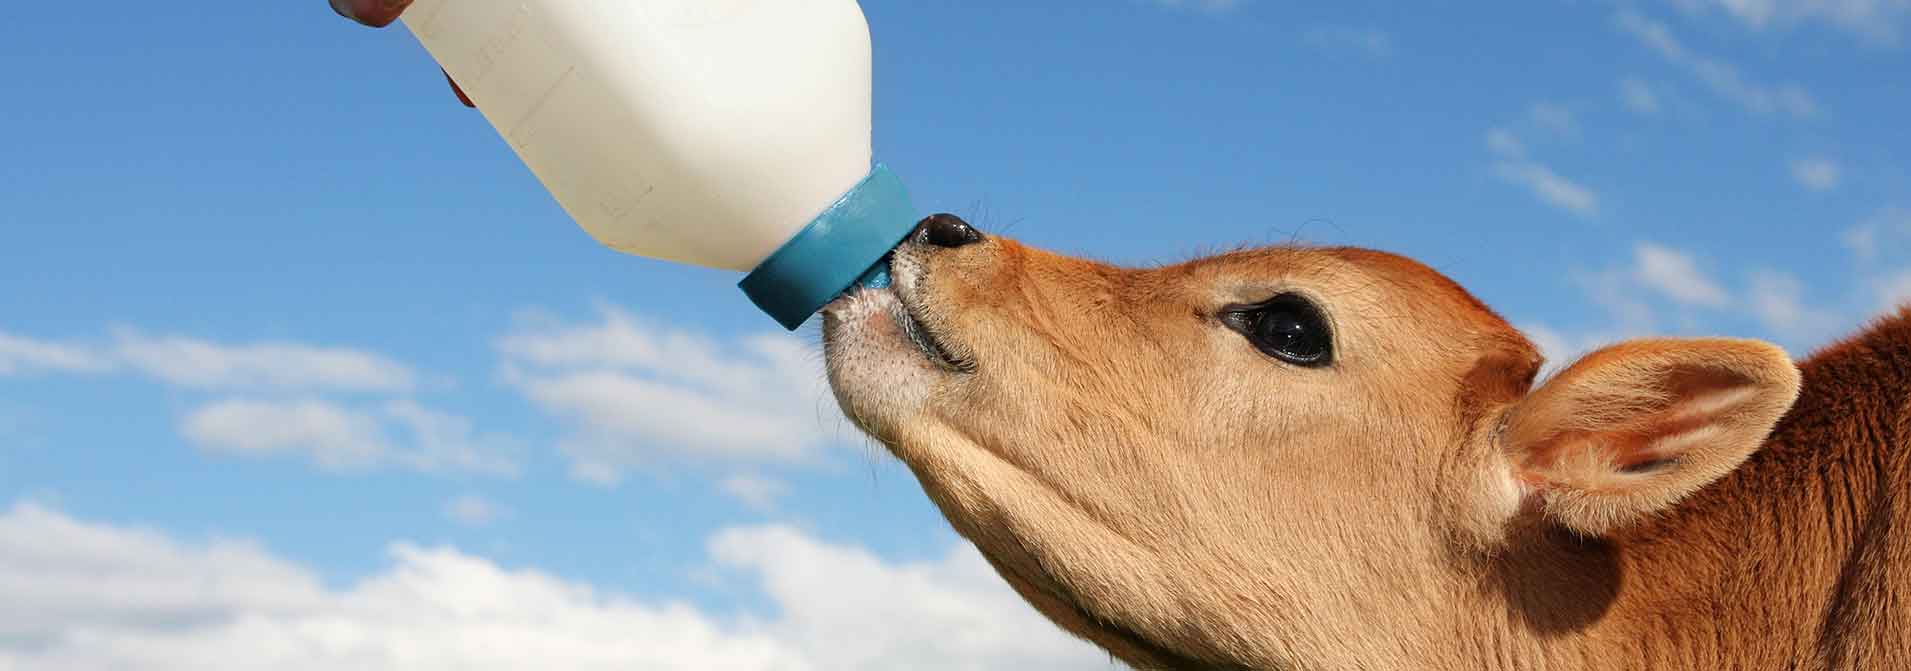 fortified-milk-guidelines